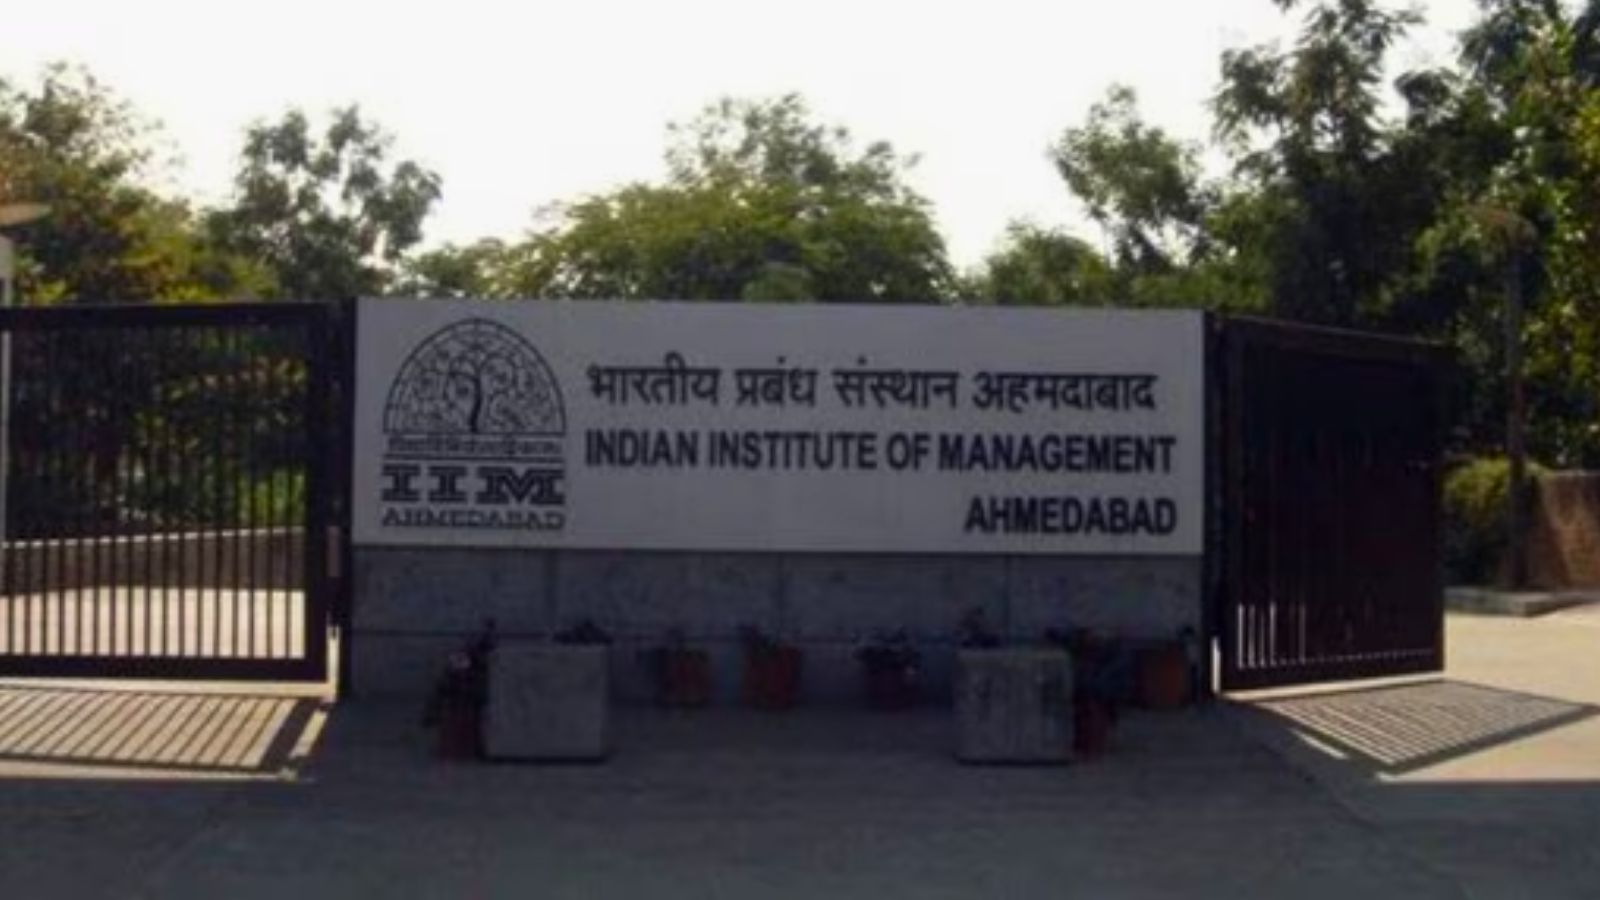 IIM Ahmedabad will be the mentor institute of Kamrup